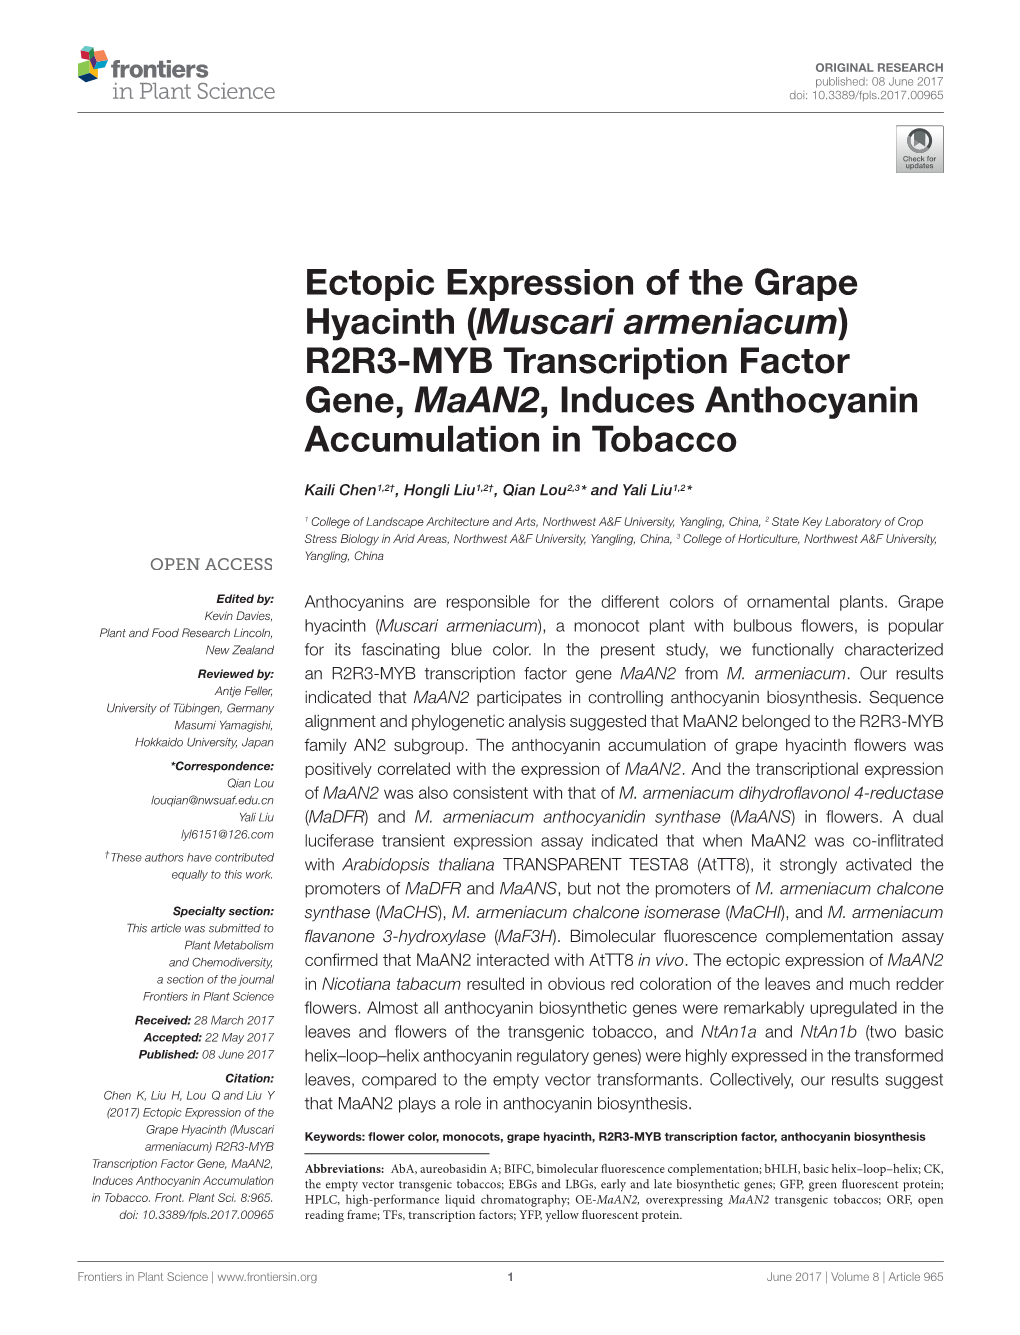 Ectopic Expression of the Grape Hyacinth (Muscari Armeniacum) R2R3-MYB Transcription Factor Gene, Maan2, Induces Anthocyanin Accumulation in Tobacco